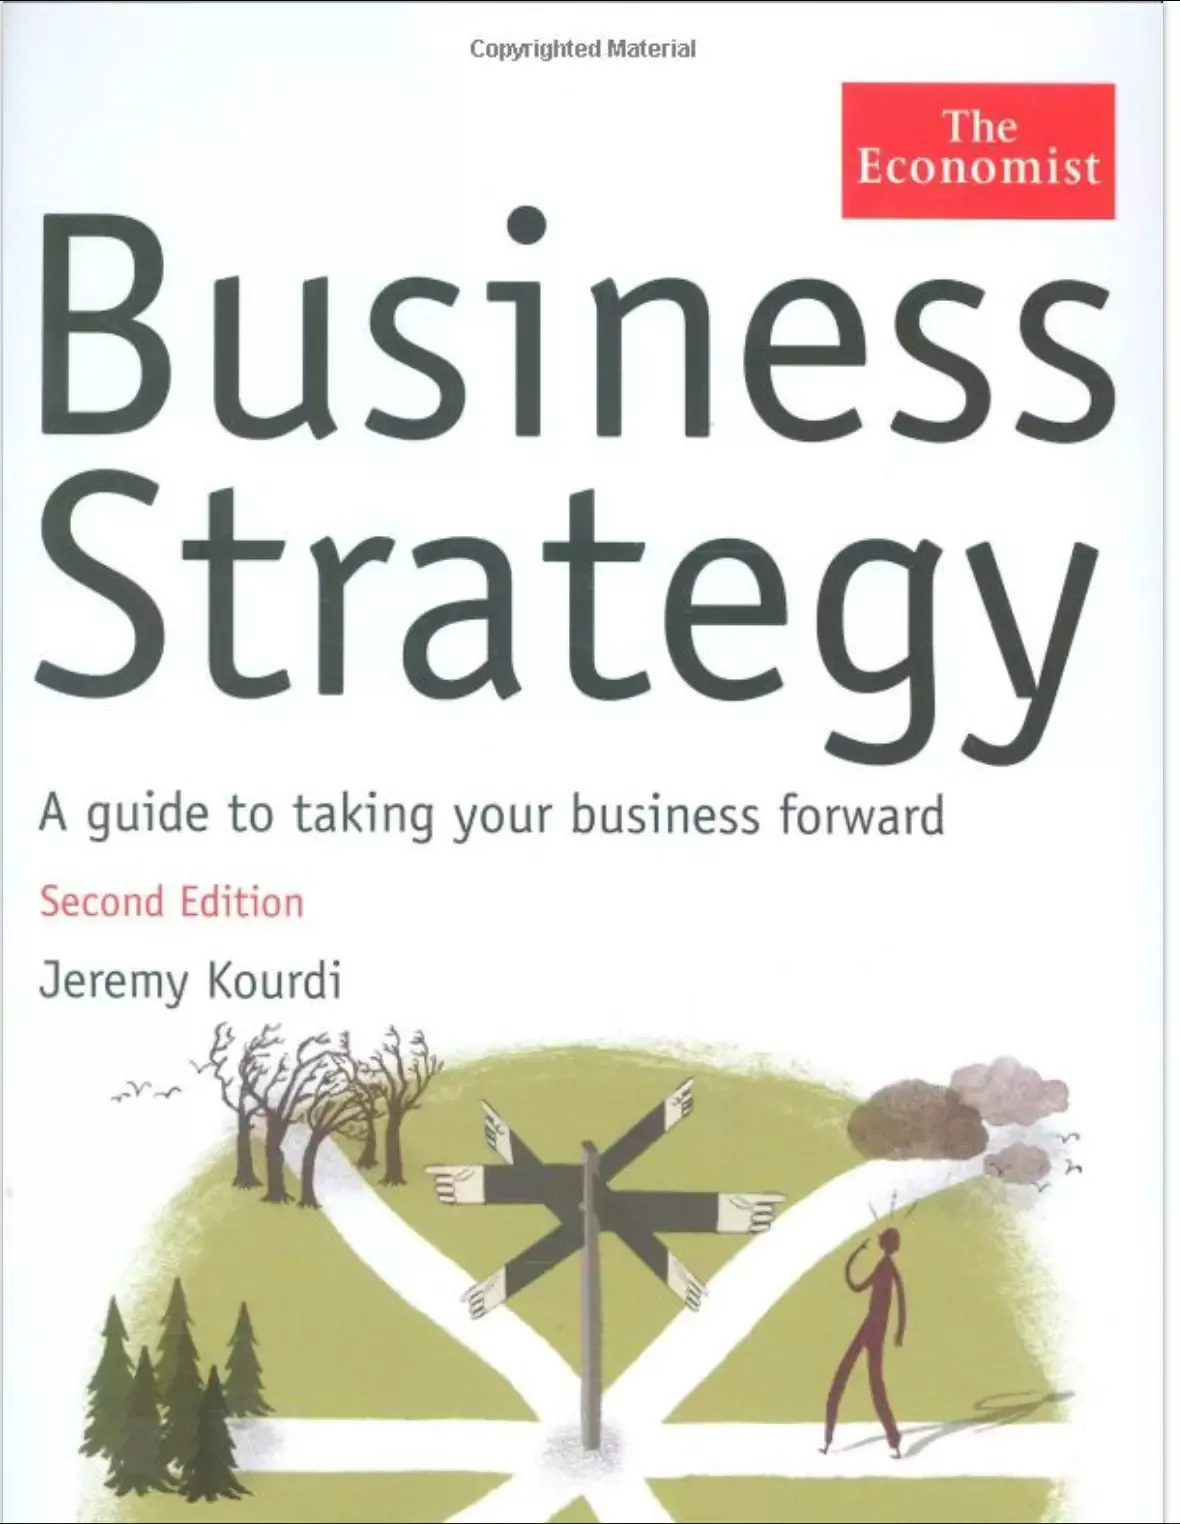 By Jeremy Kourdi, Business Strategy